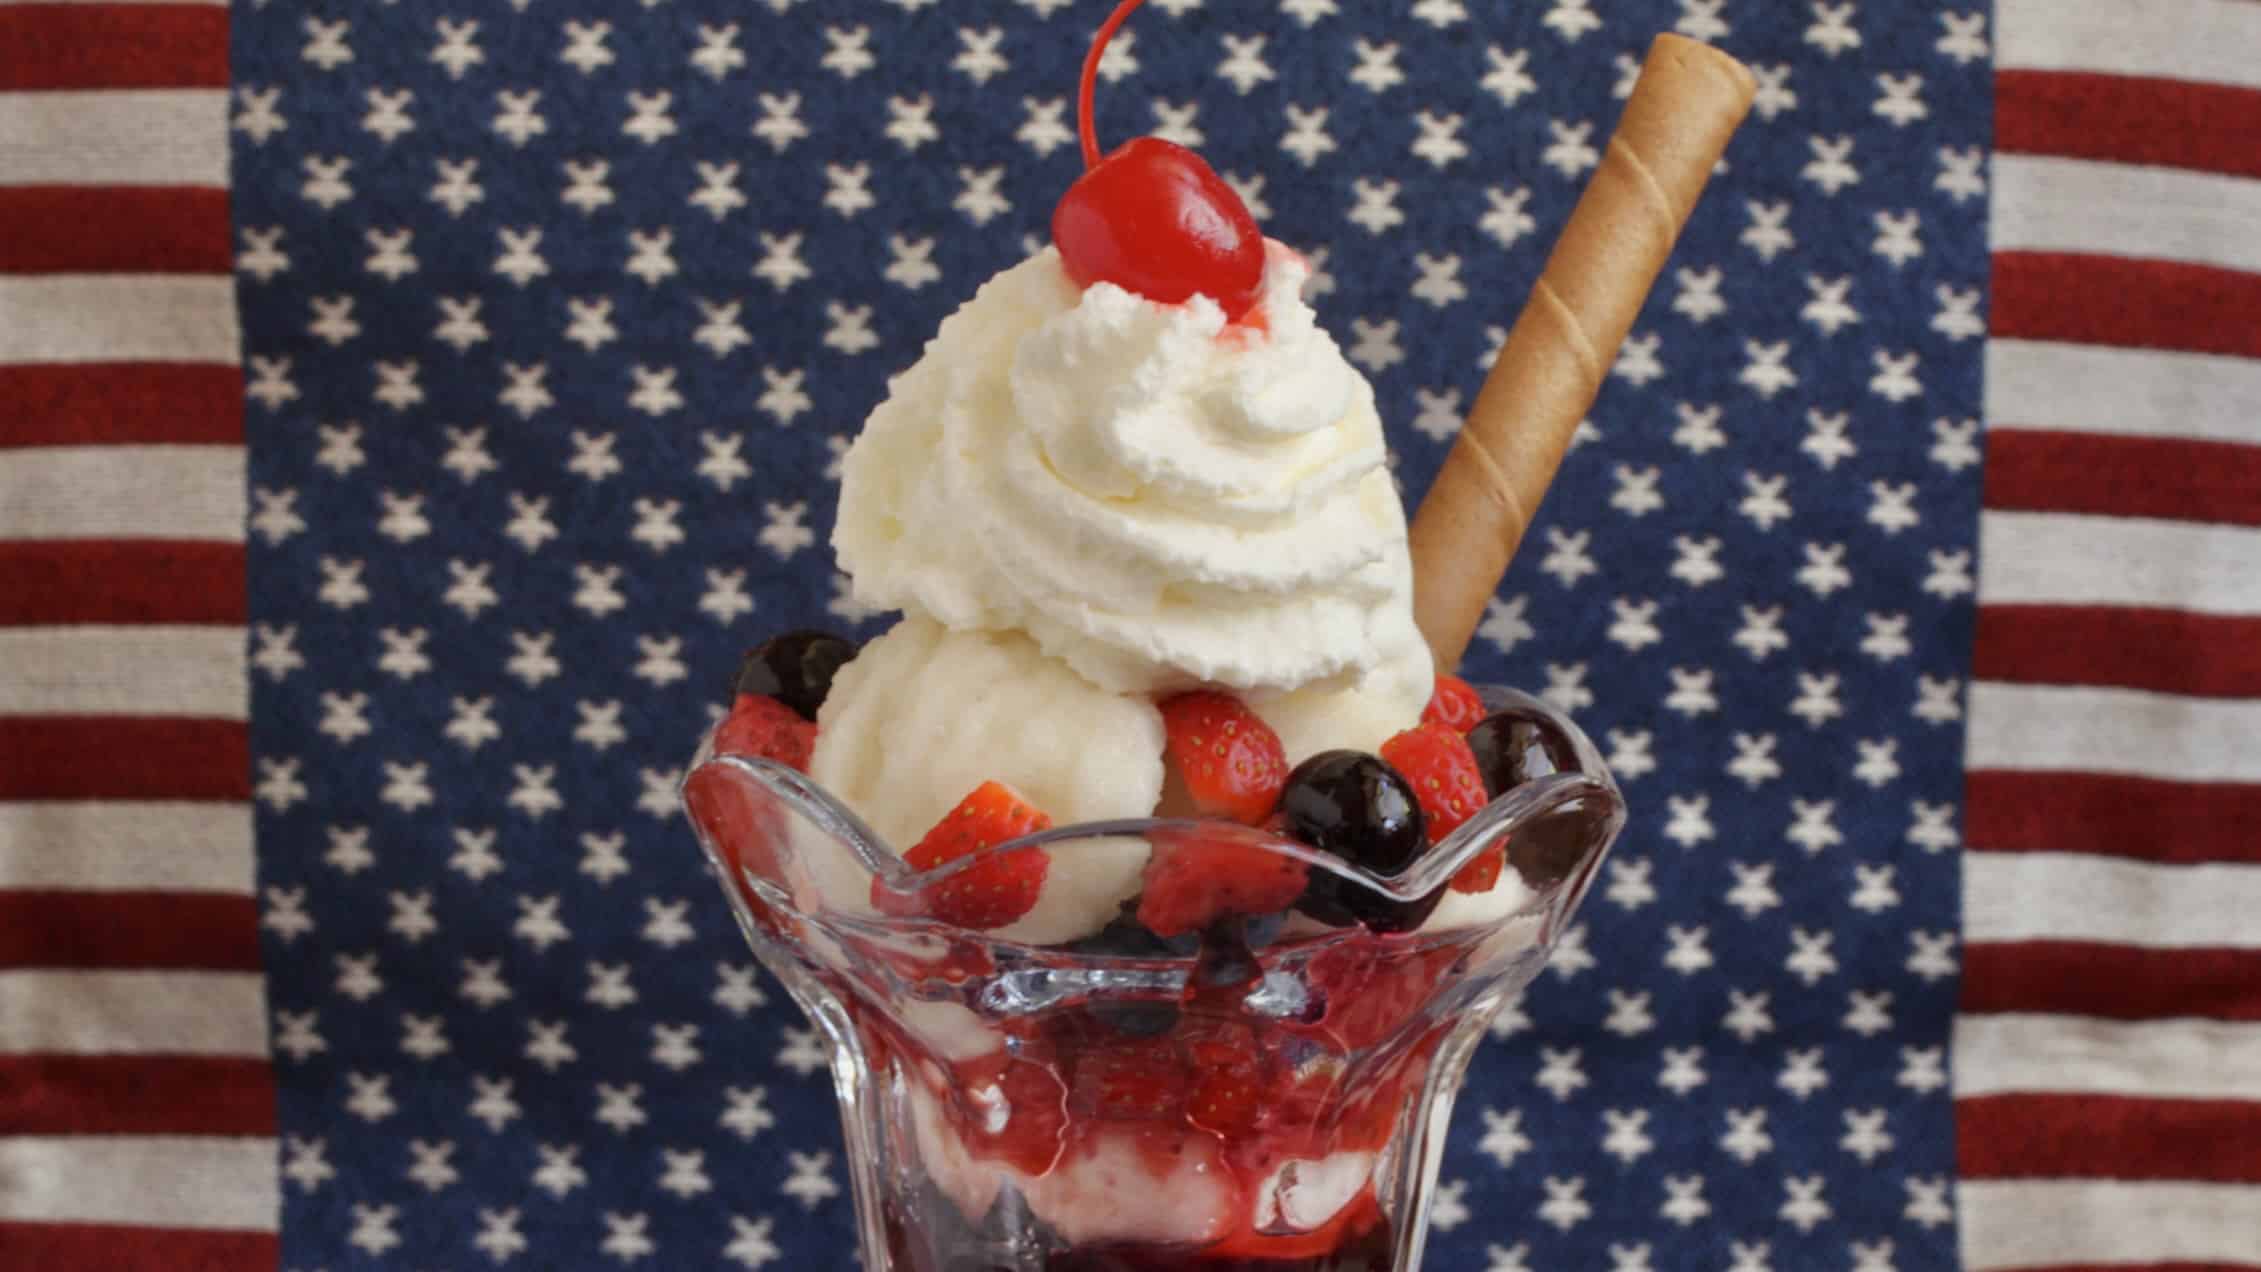 Knickerbocker Glory - An American-British sundae treat!